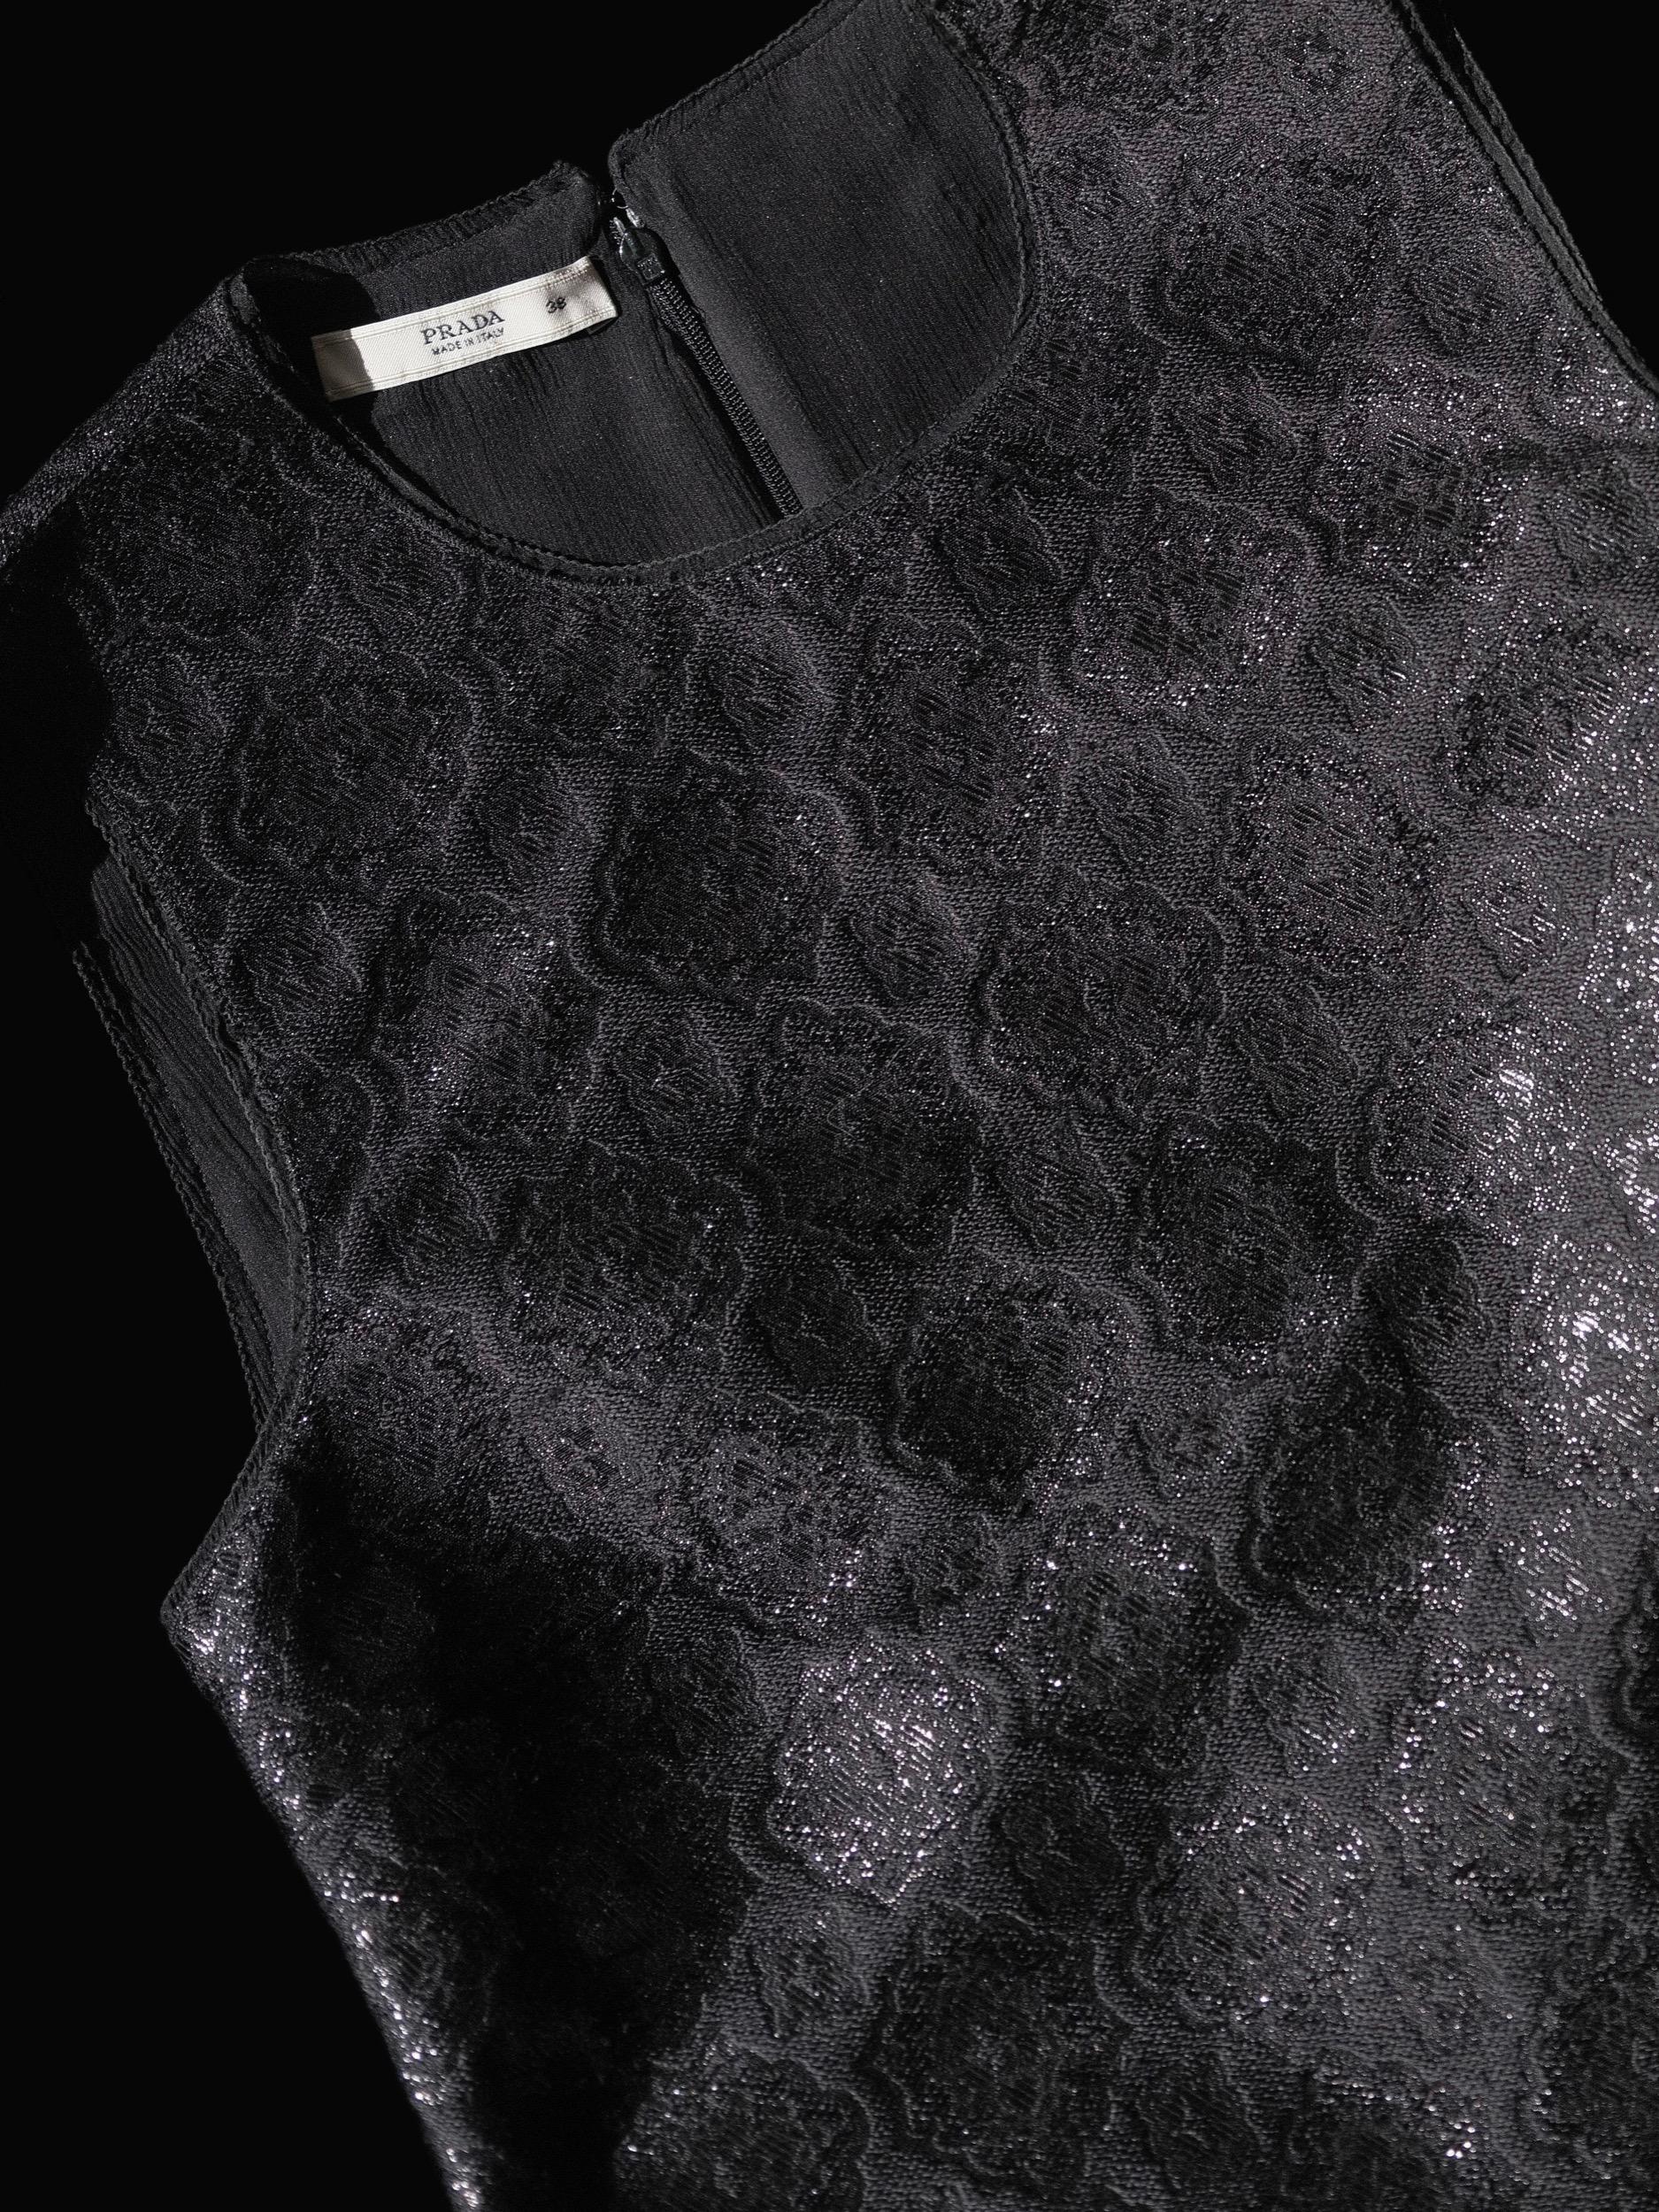 Beige Prada Brocade Top Metallic Black Silk SS08 Size 38 For Sale